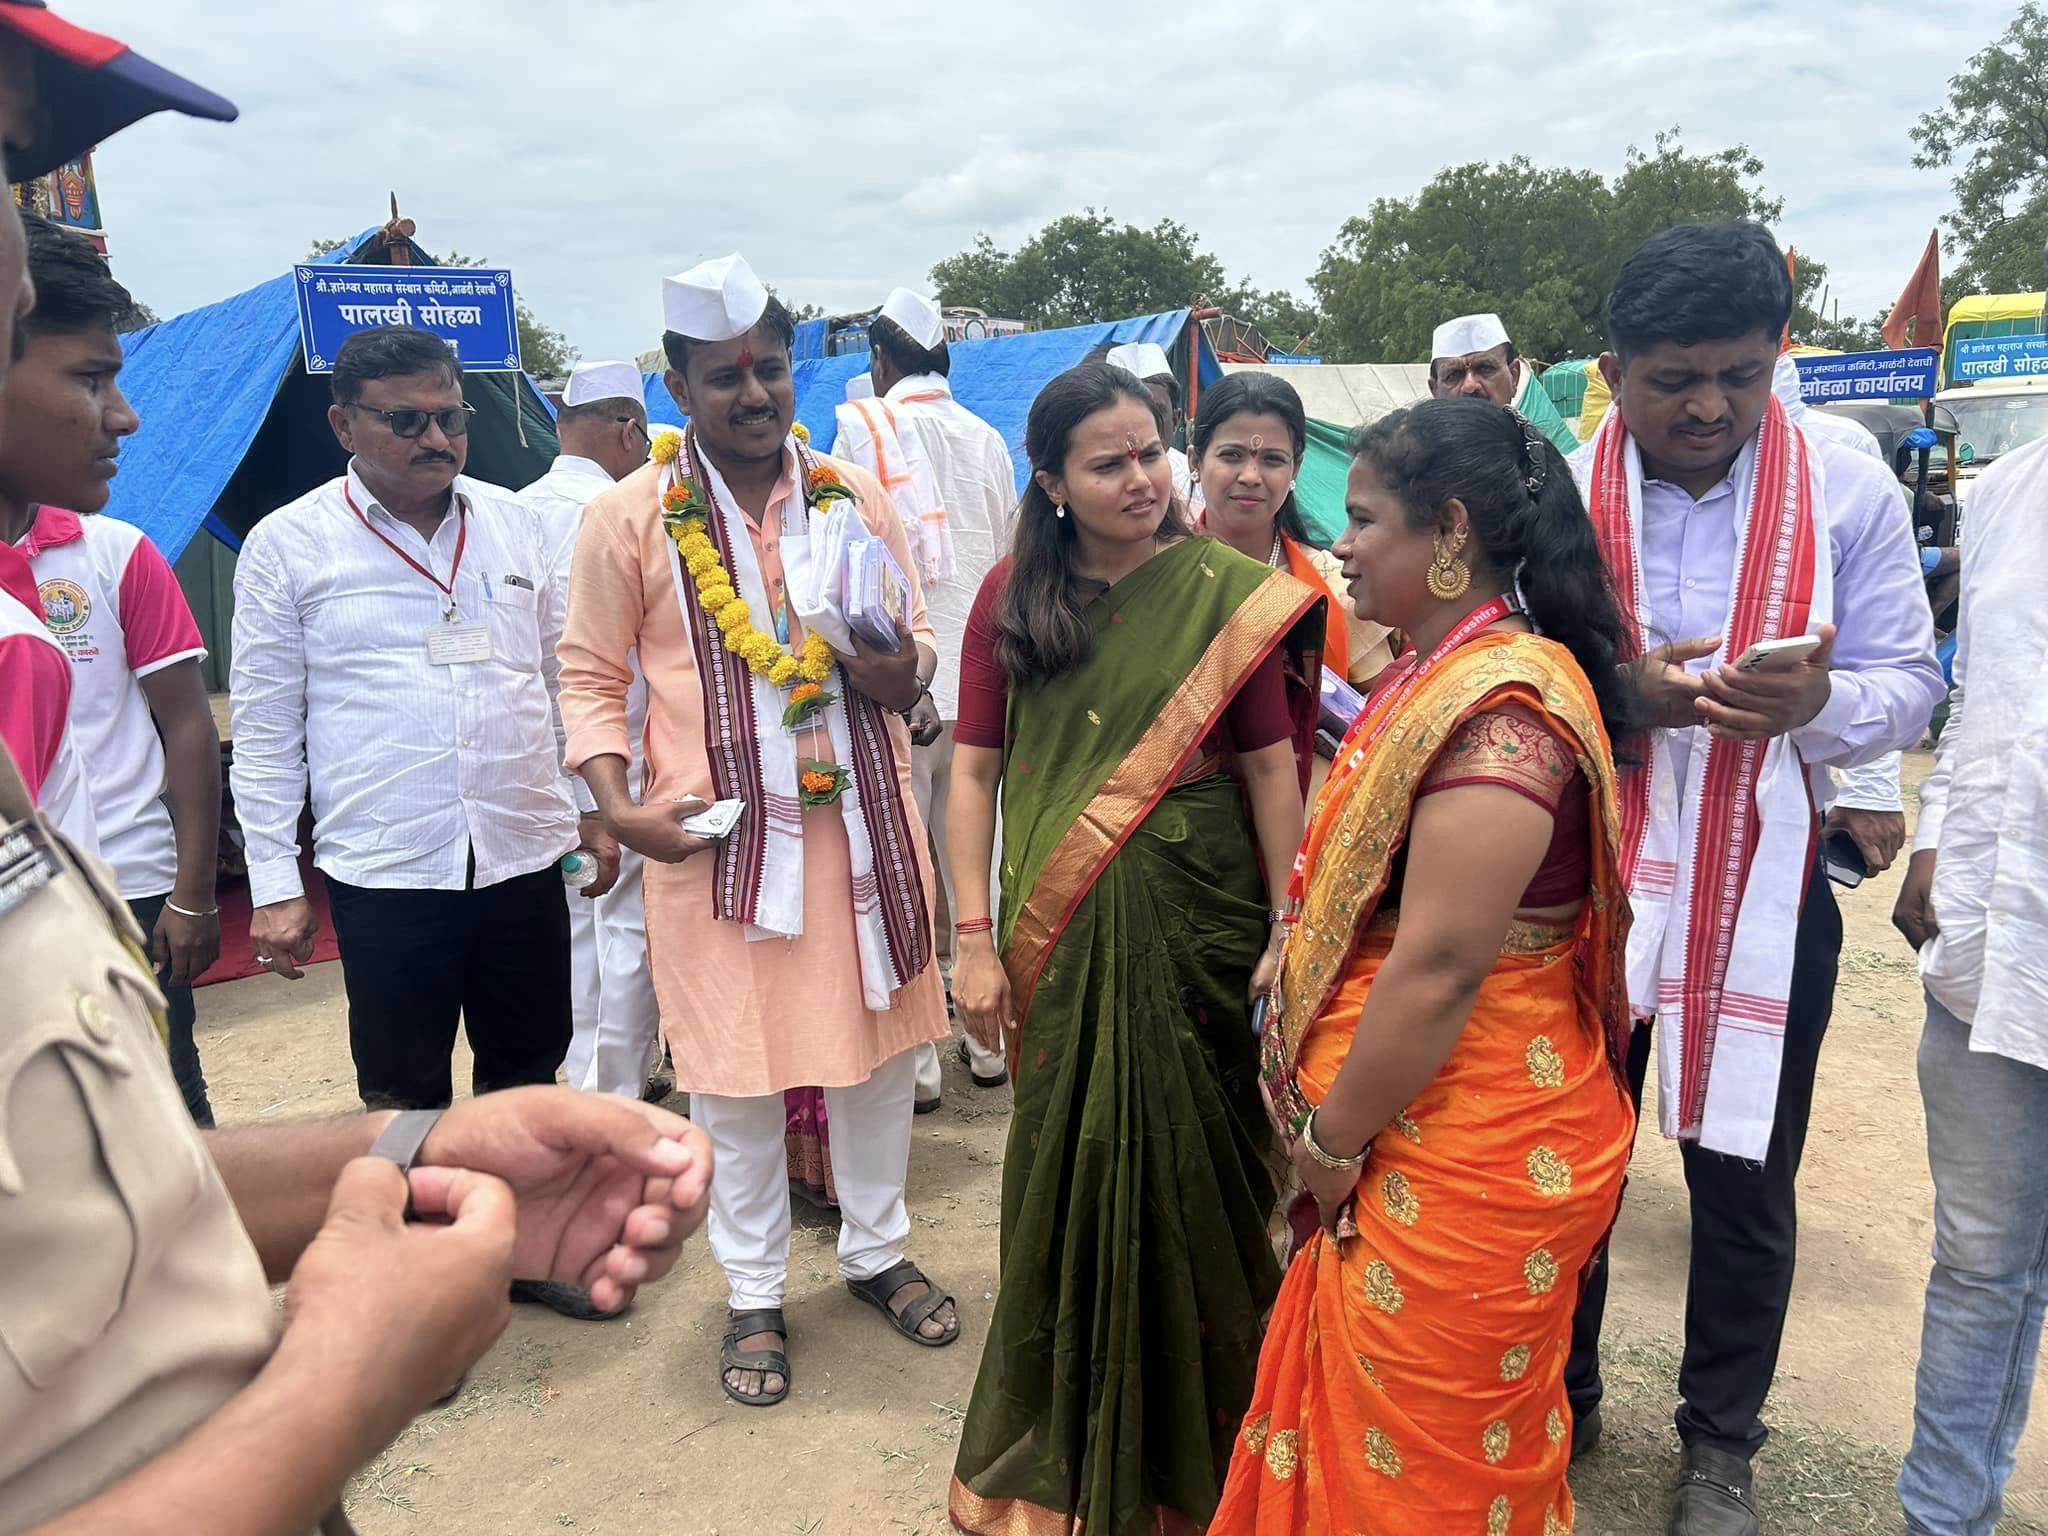 At Mauli palkhi ceremony CEO Manisha Awhale was stunned by the bhajan